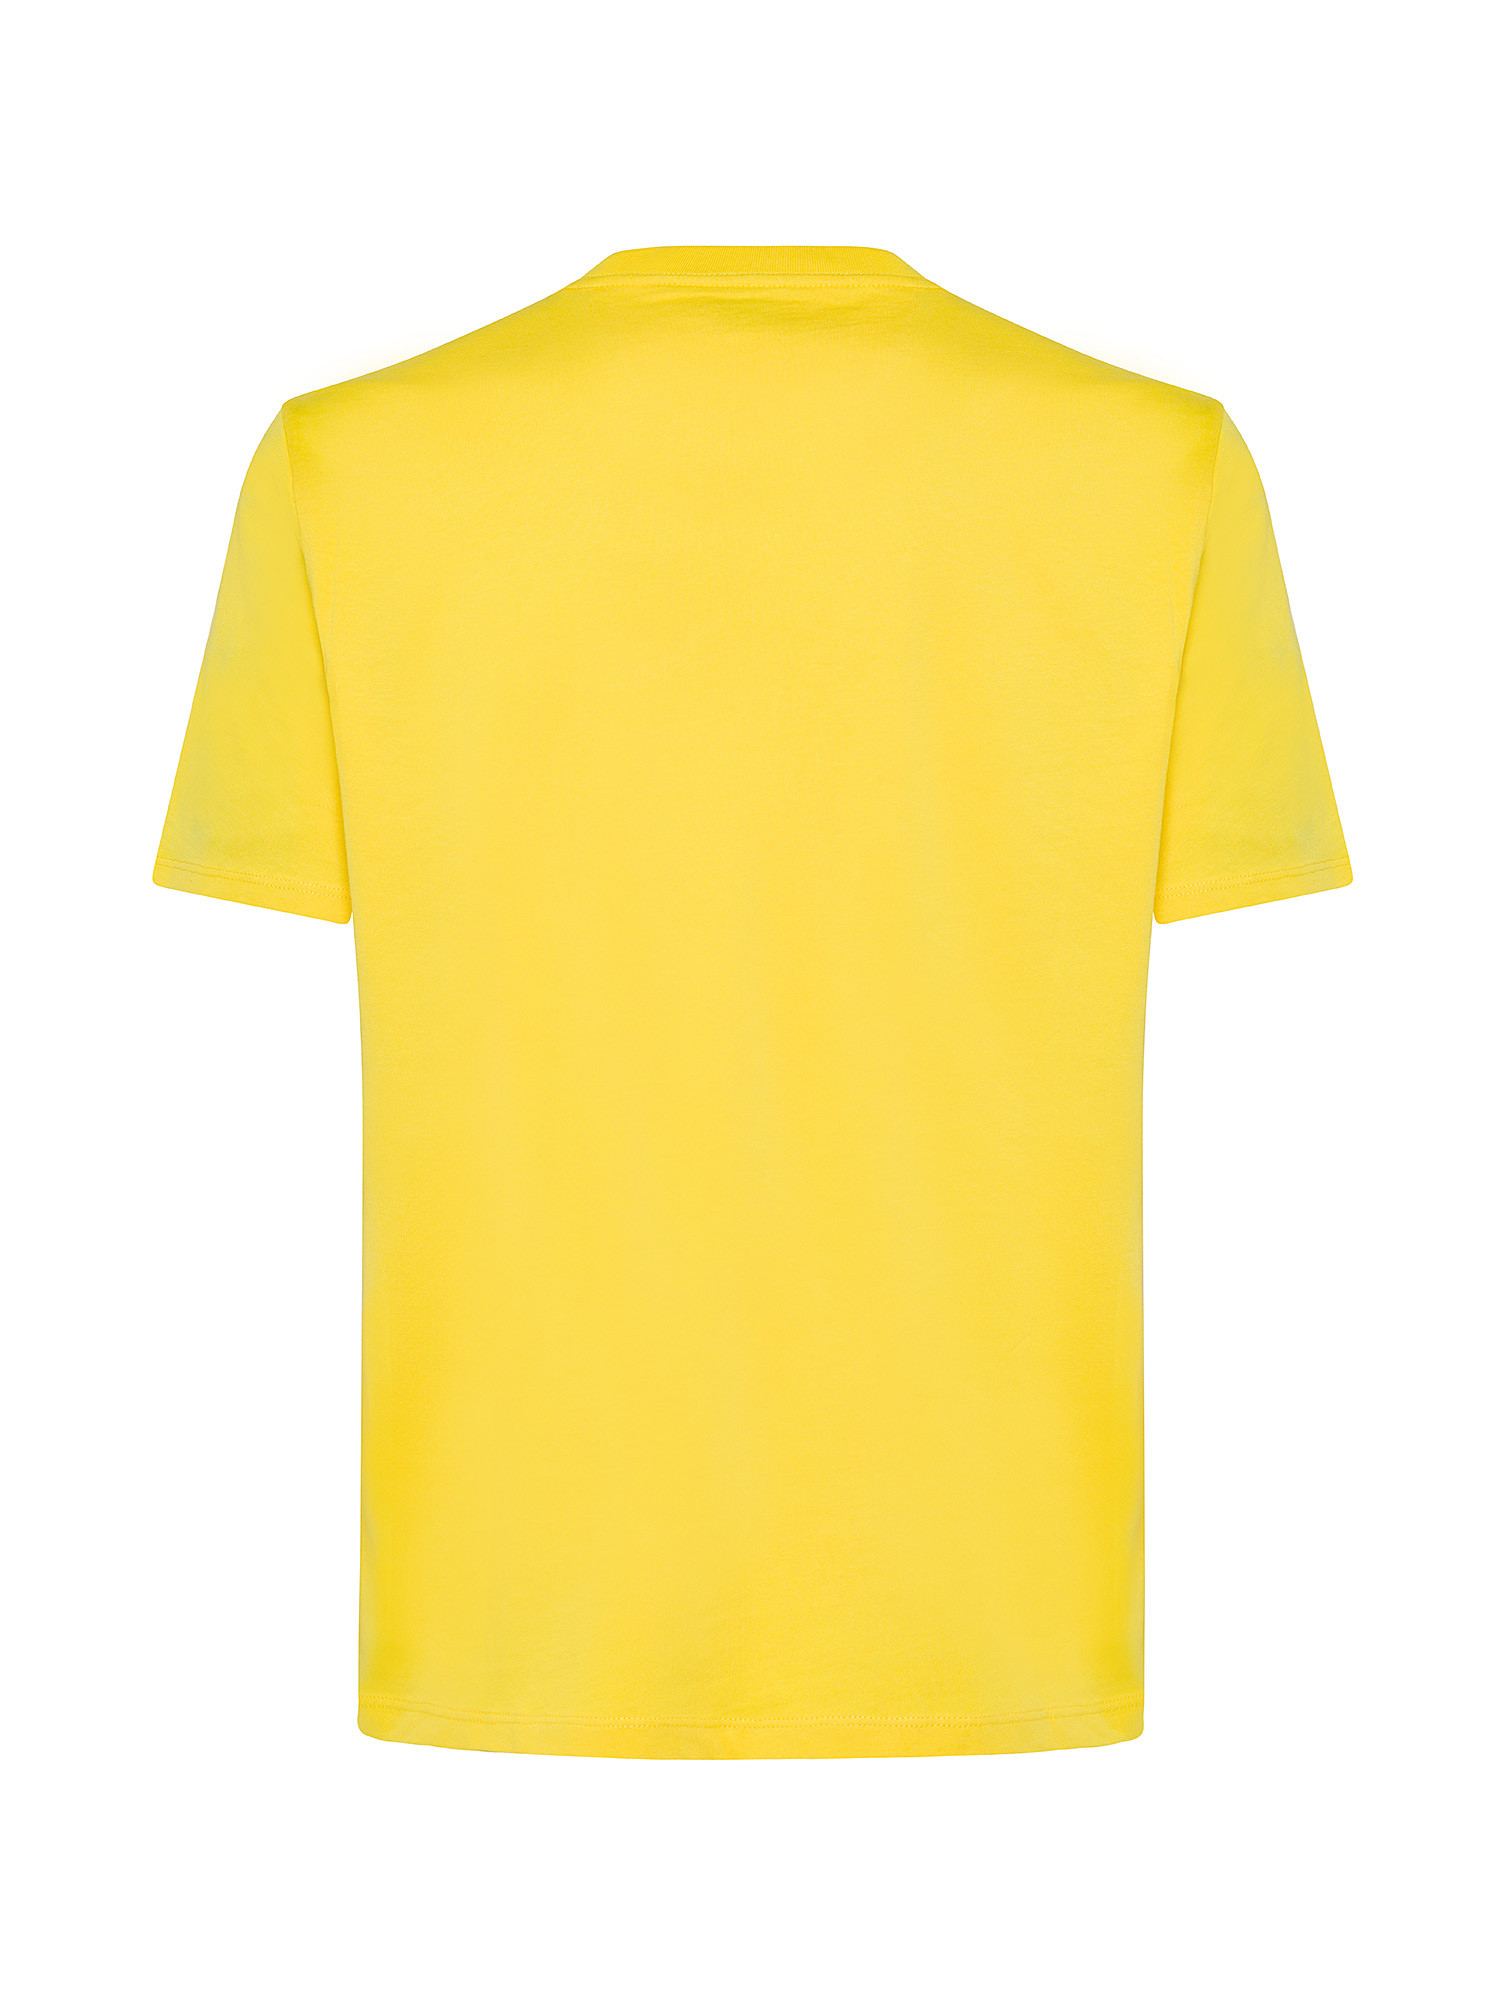 JCT - Pure supima cotton T-shirt, Lemon Yellow, large image number 1